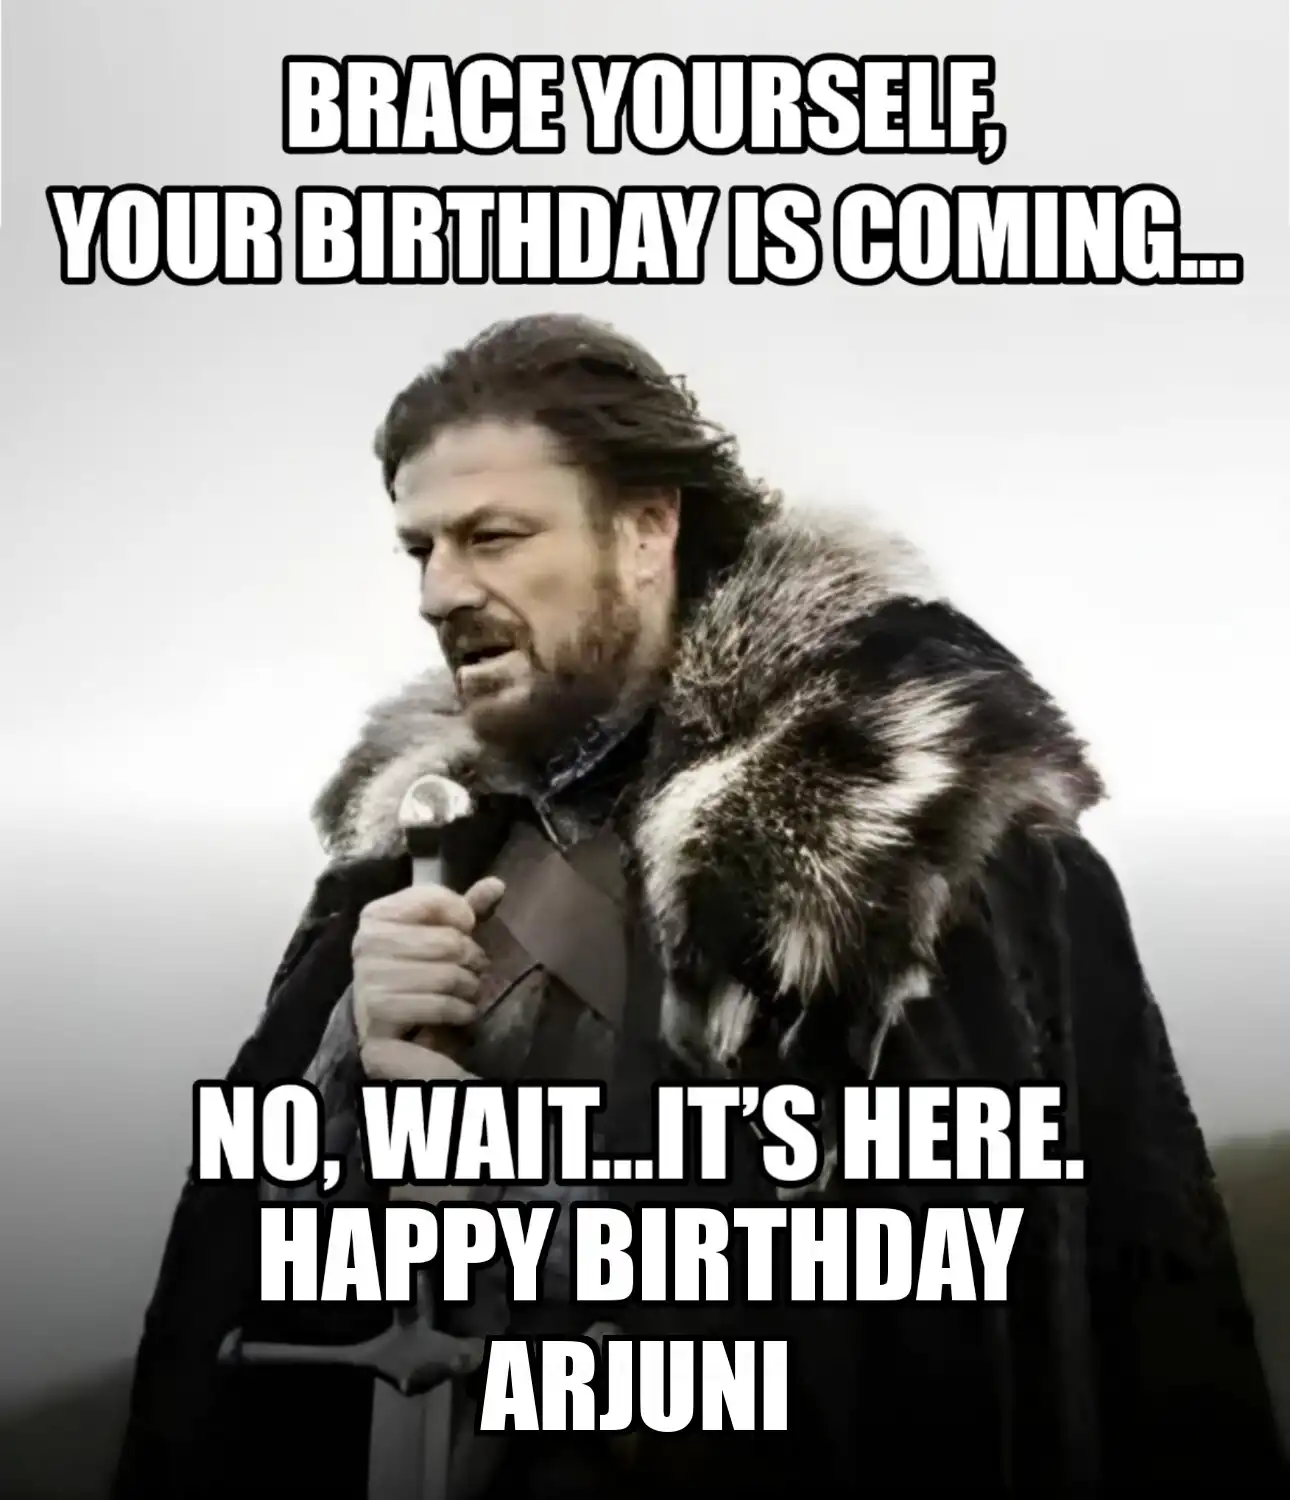 Happy Birthday Arjuni Brace Yourself Your Birthday Is Coming Meme